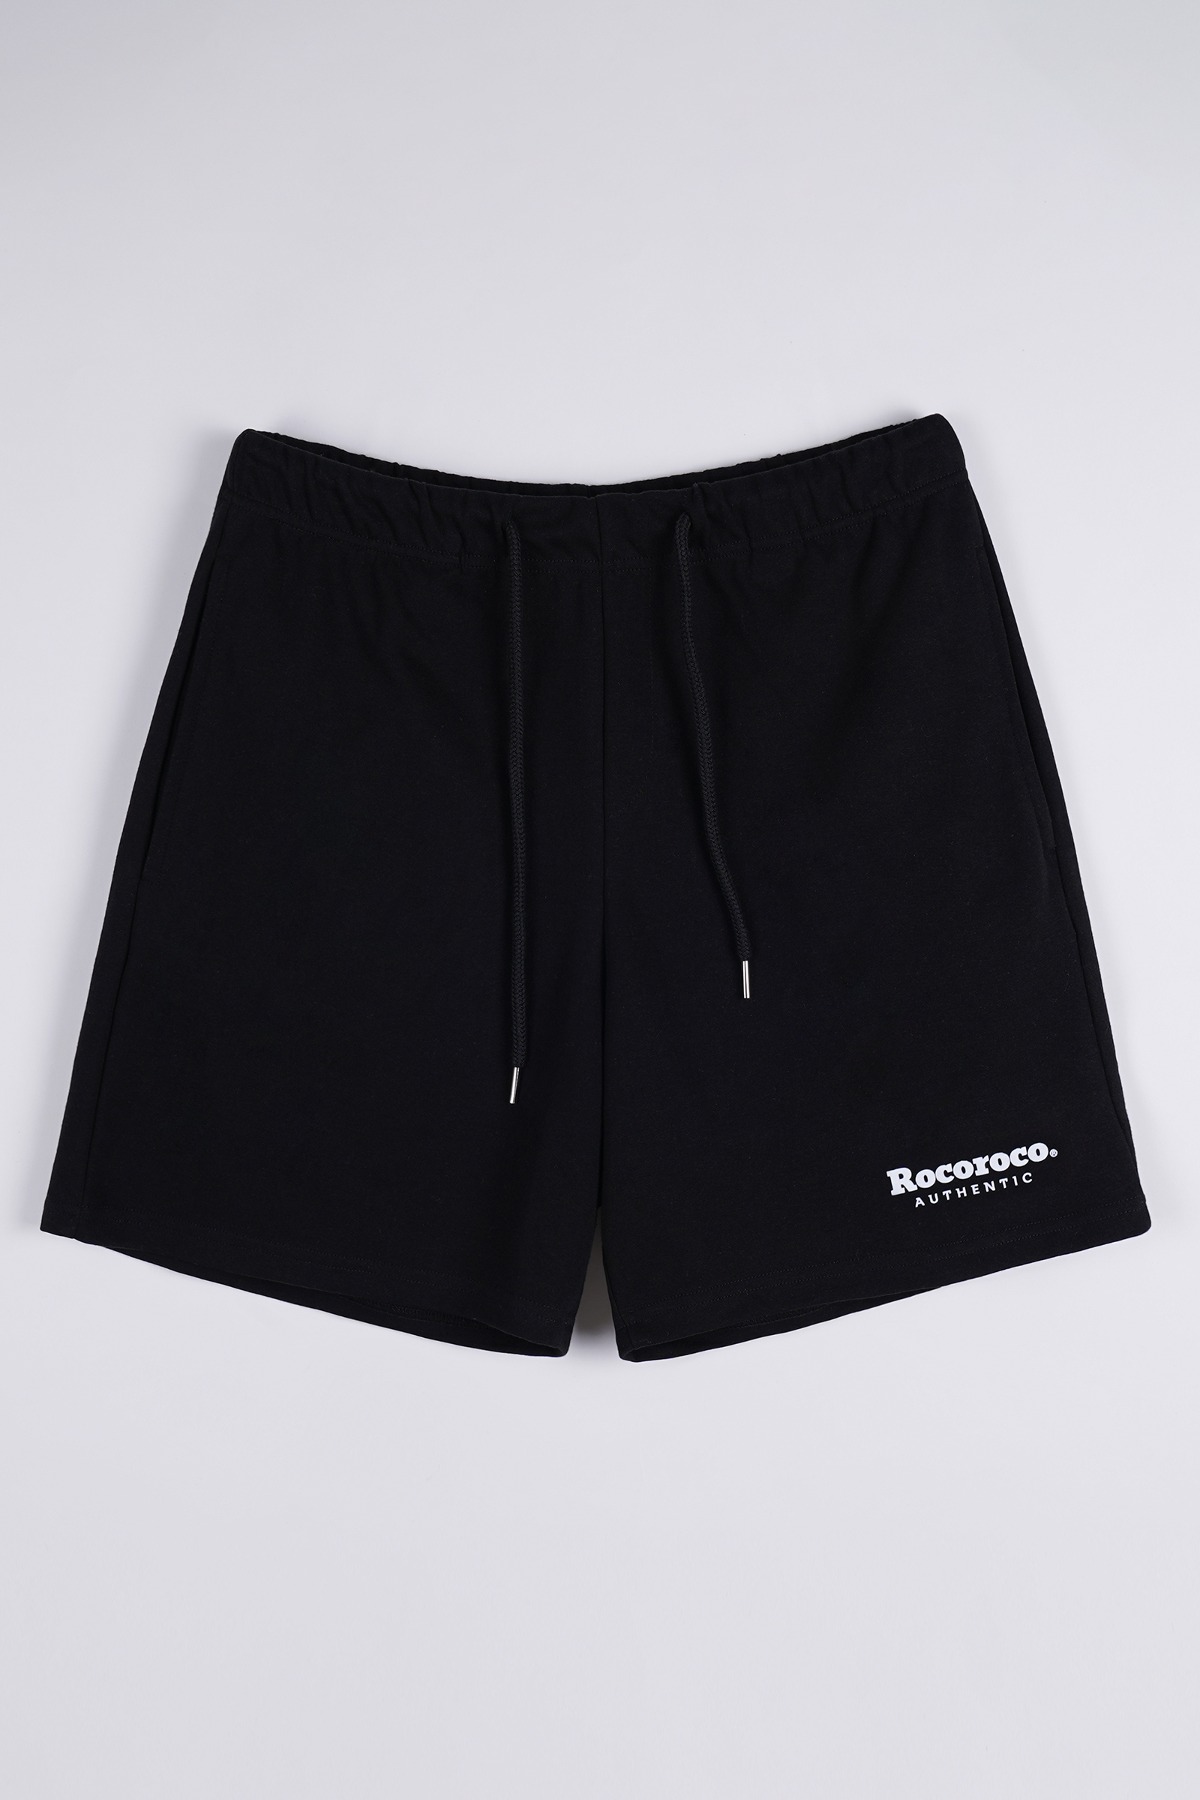 R Authentic Shorts black